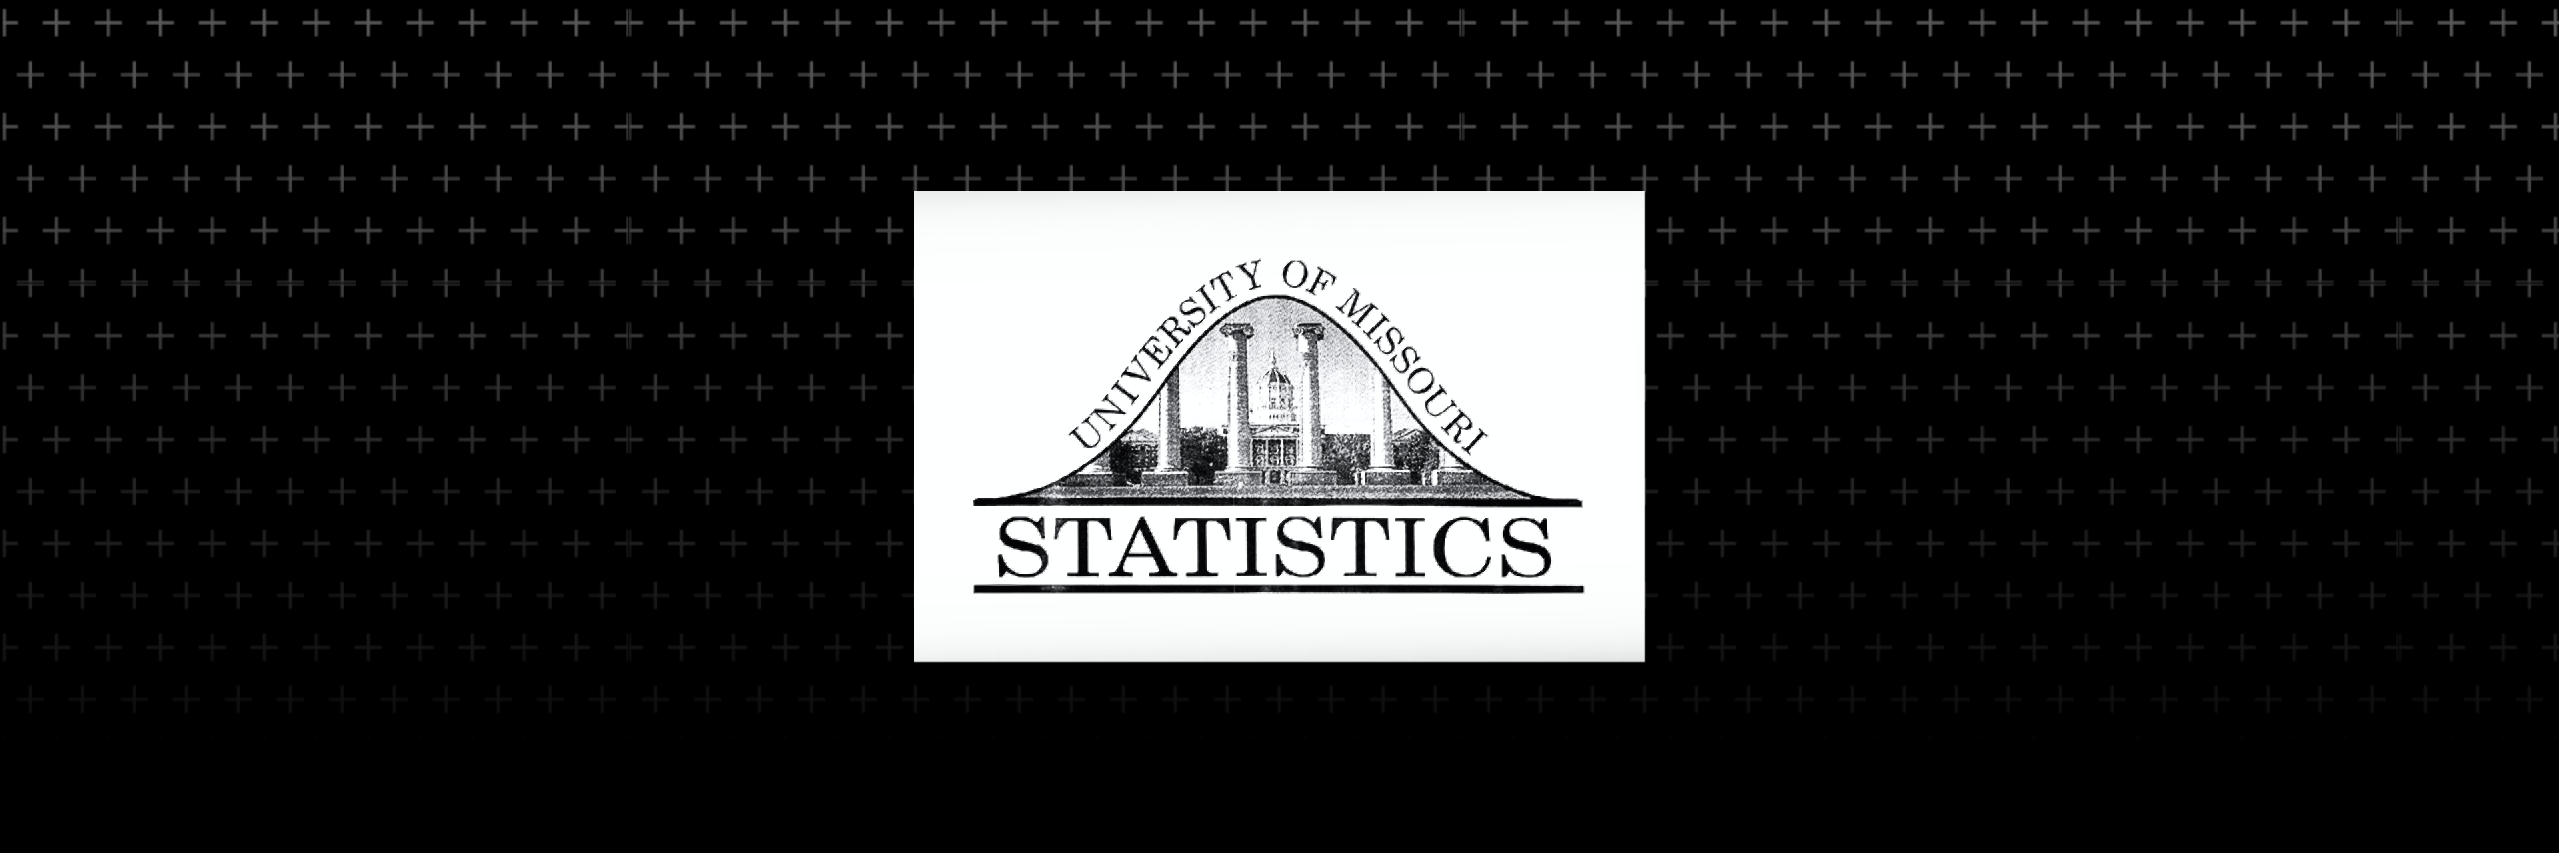 Statistics Banner